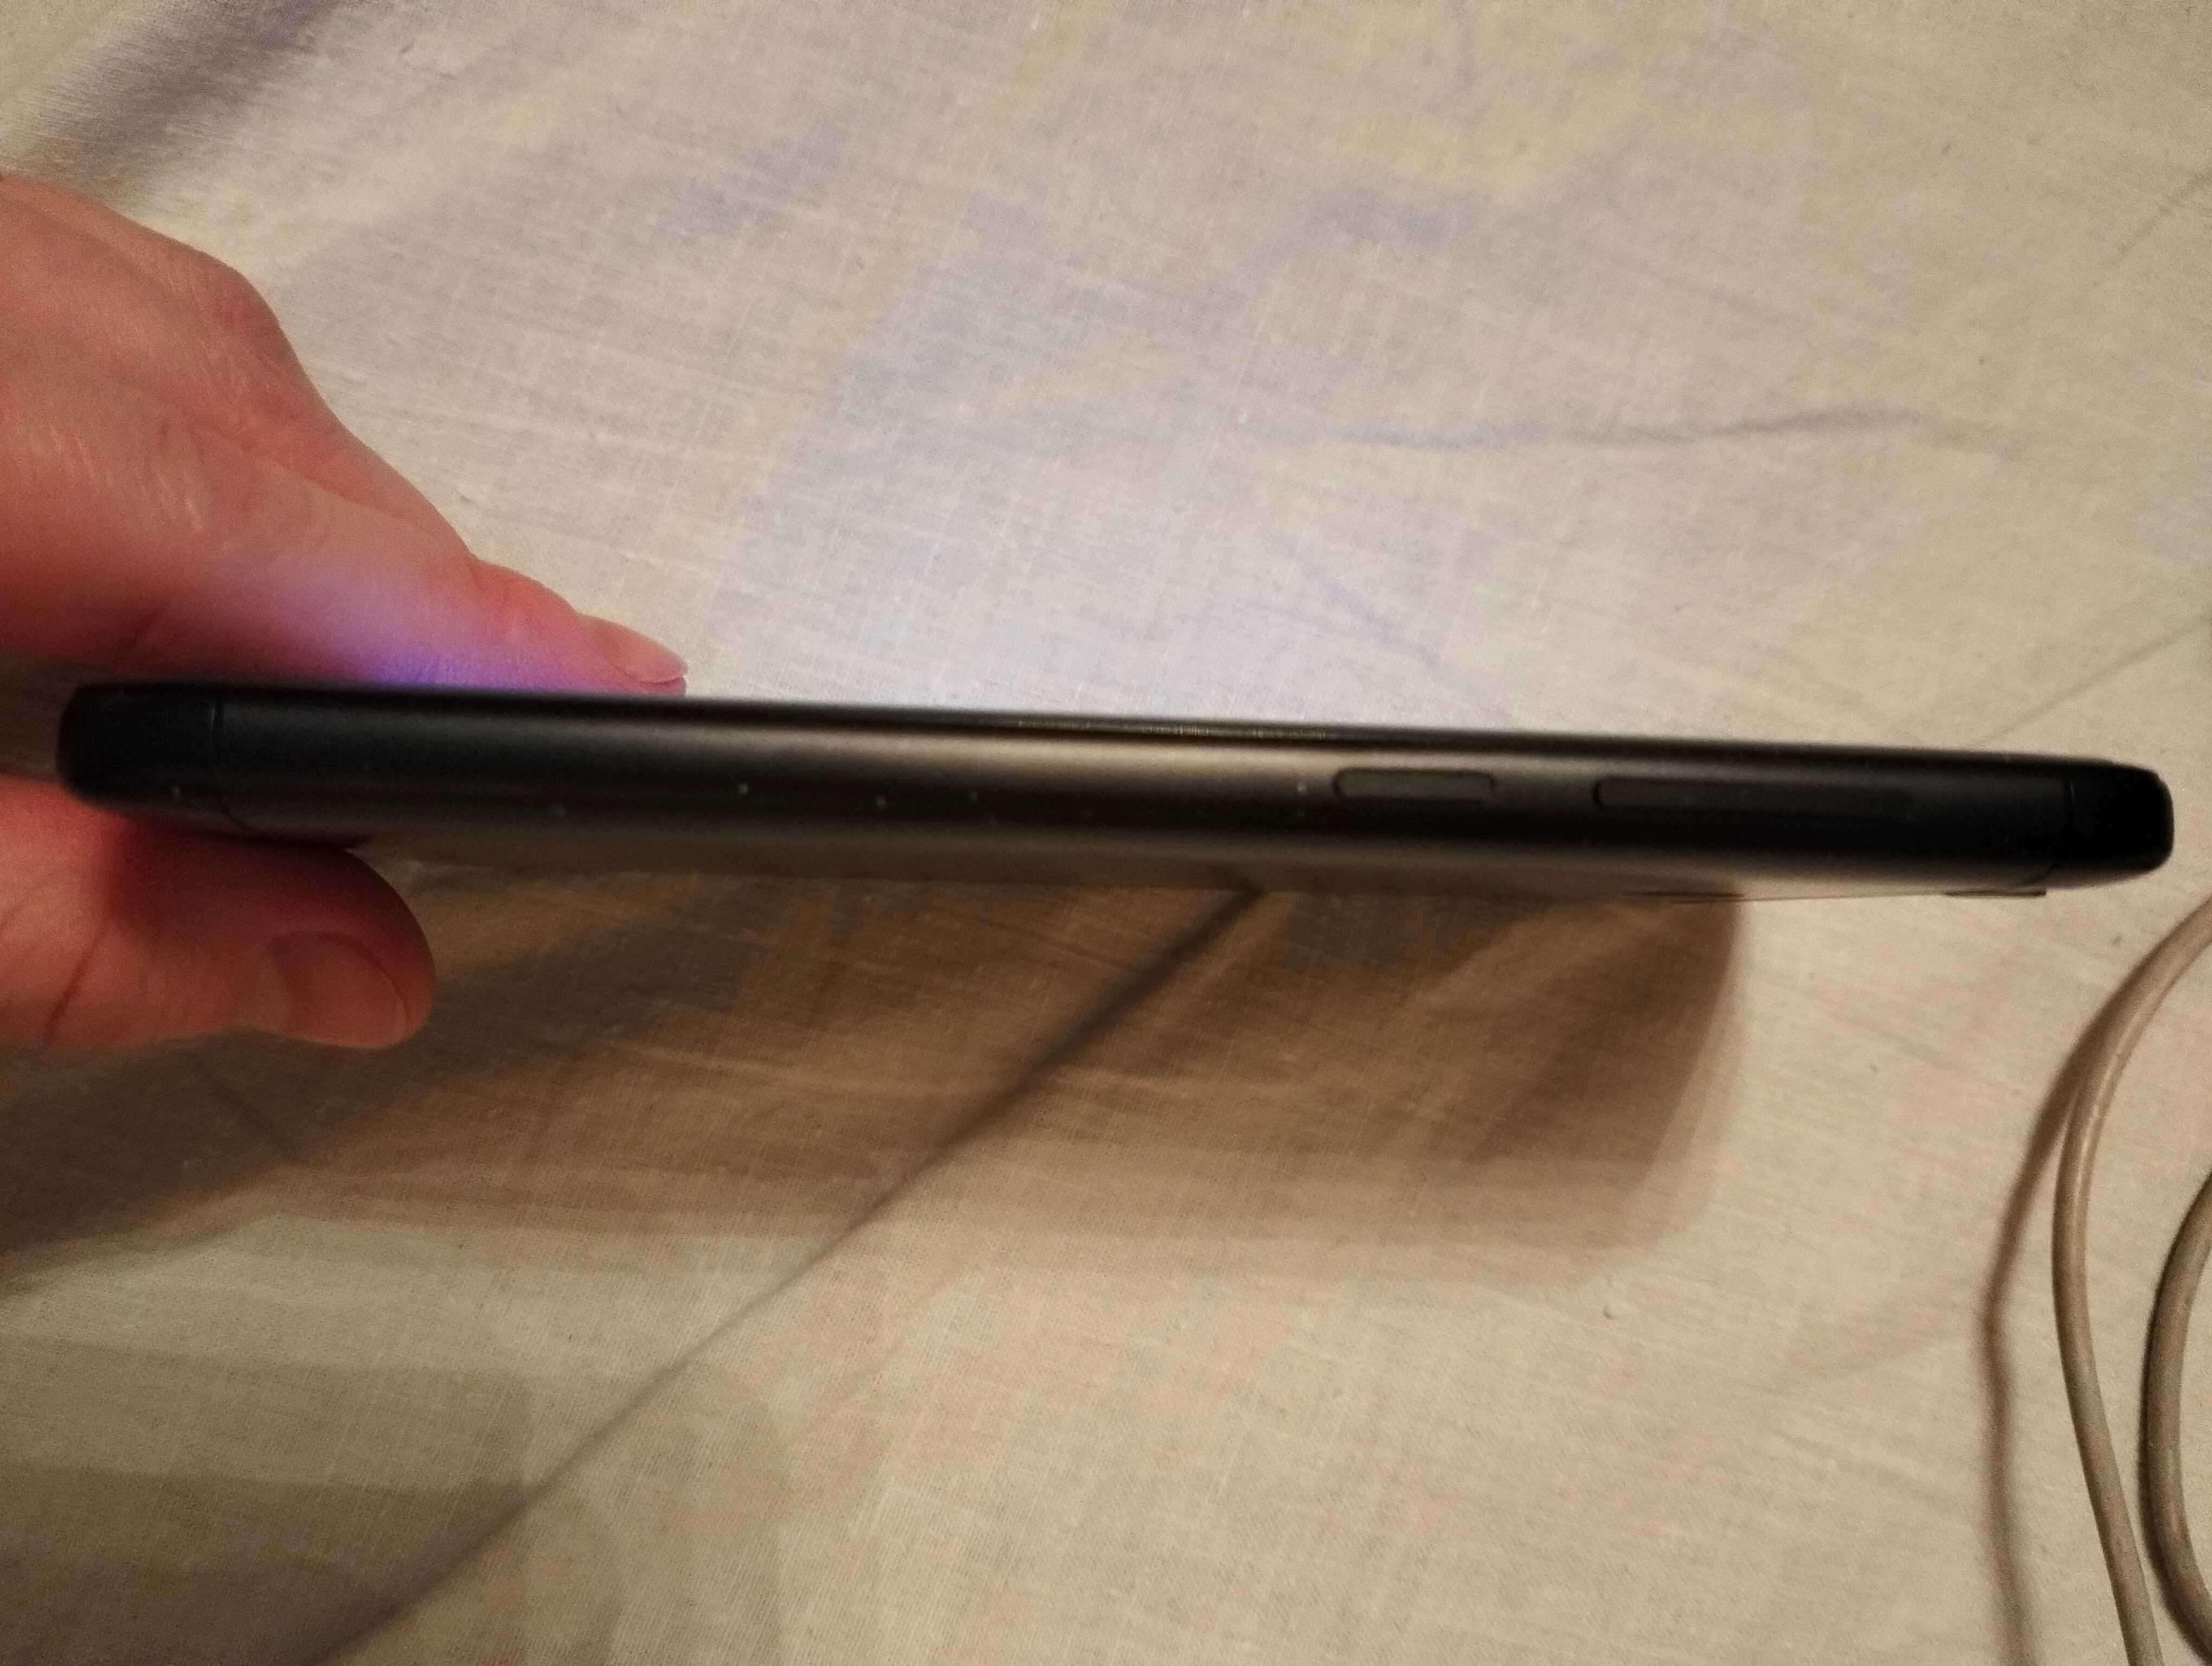 Смартфон Xiaomi Redmi 4x 2/16GB Black